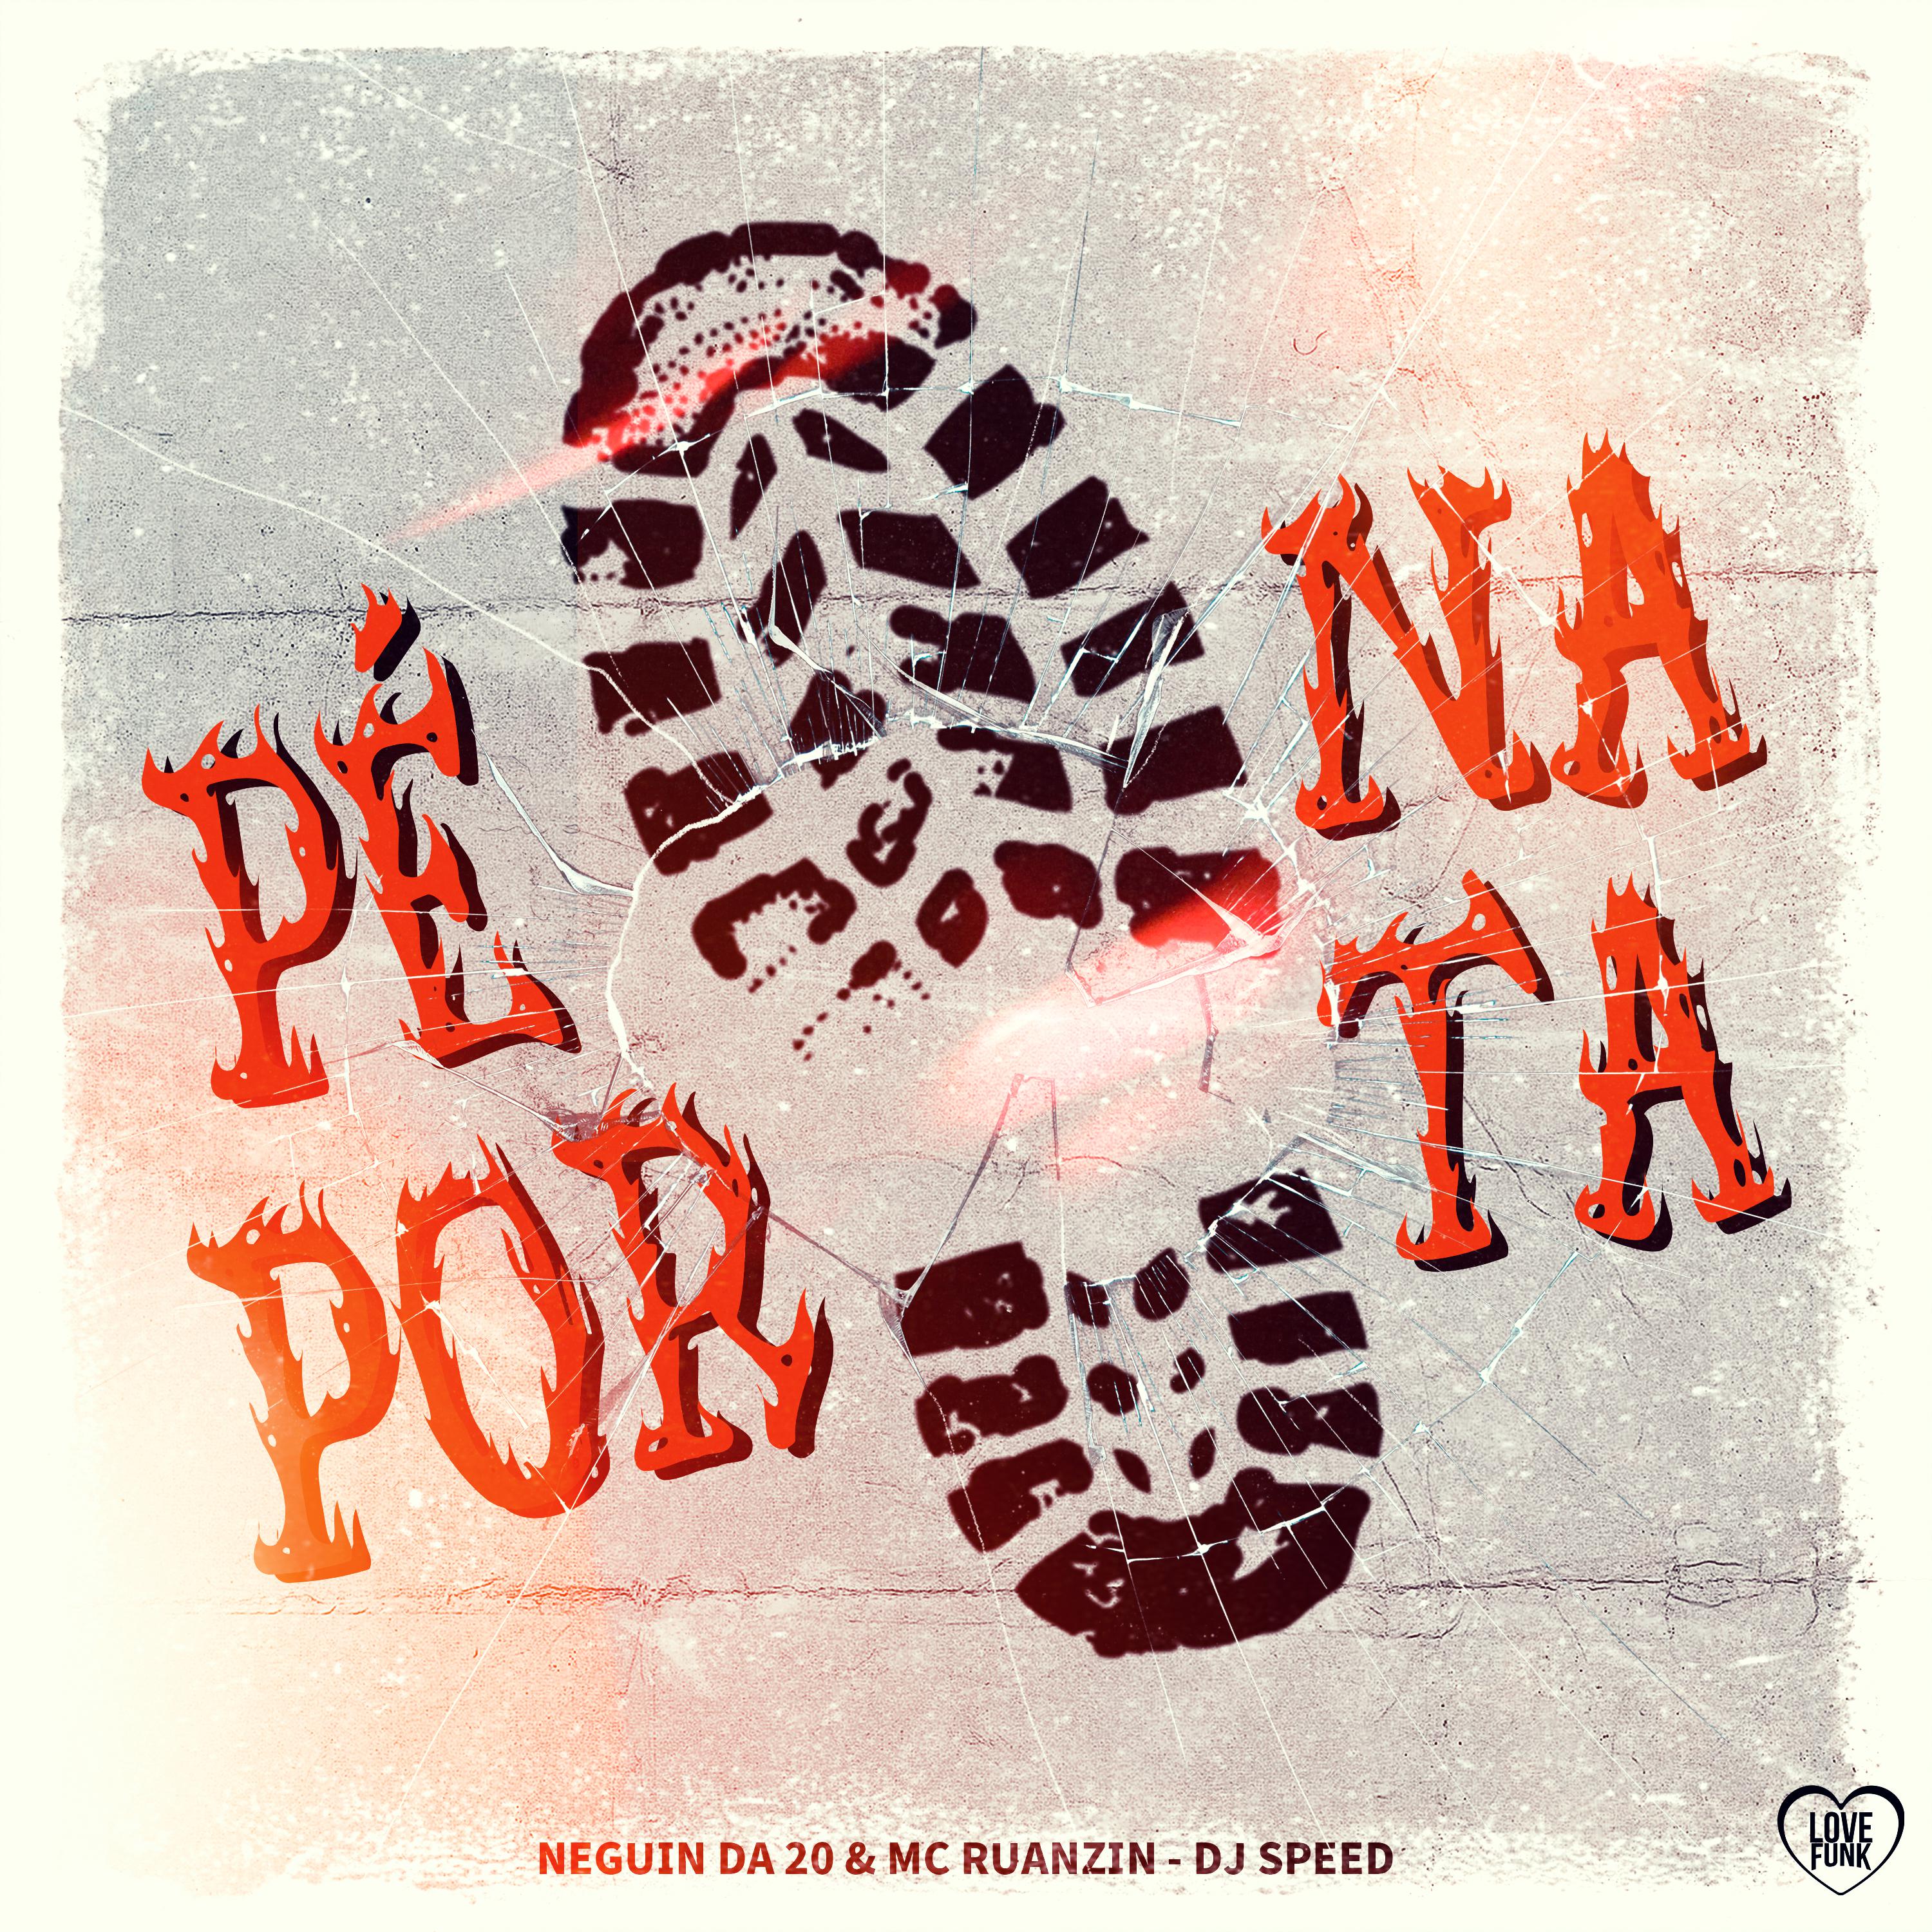 Постер альбома Pé na Porta